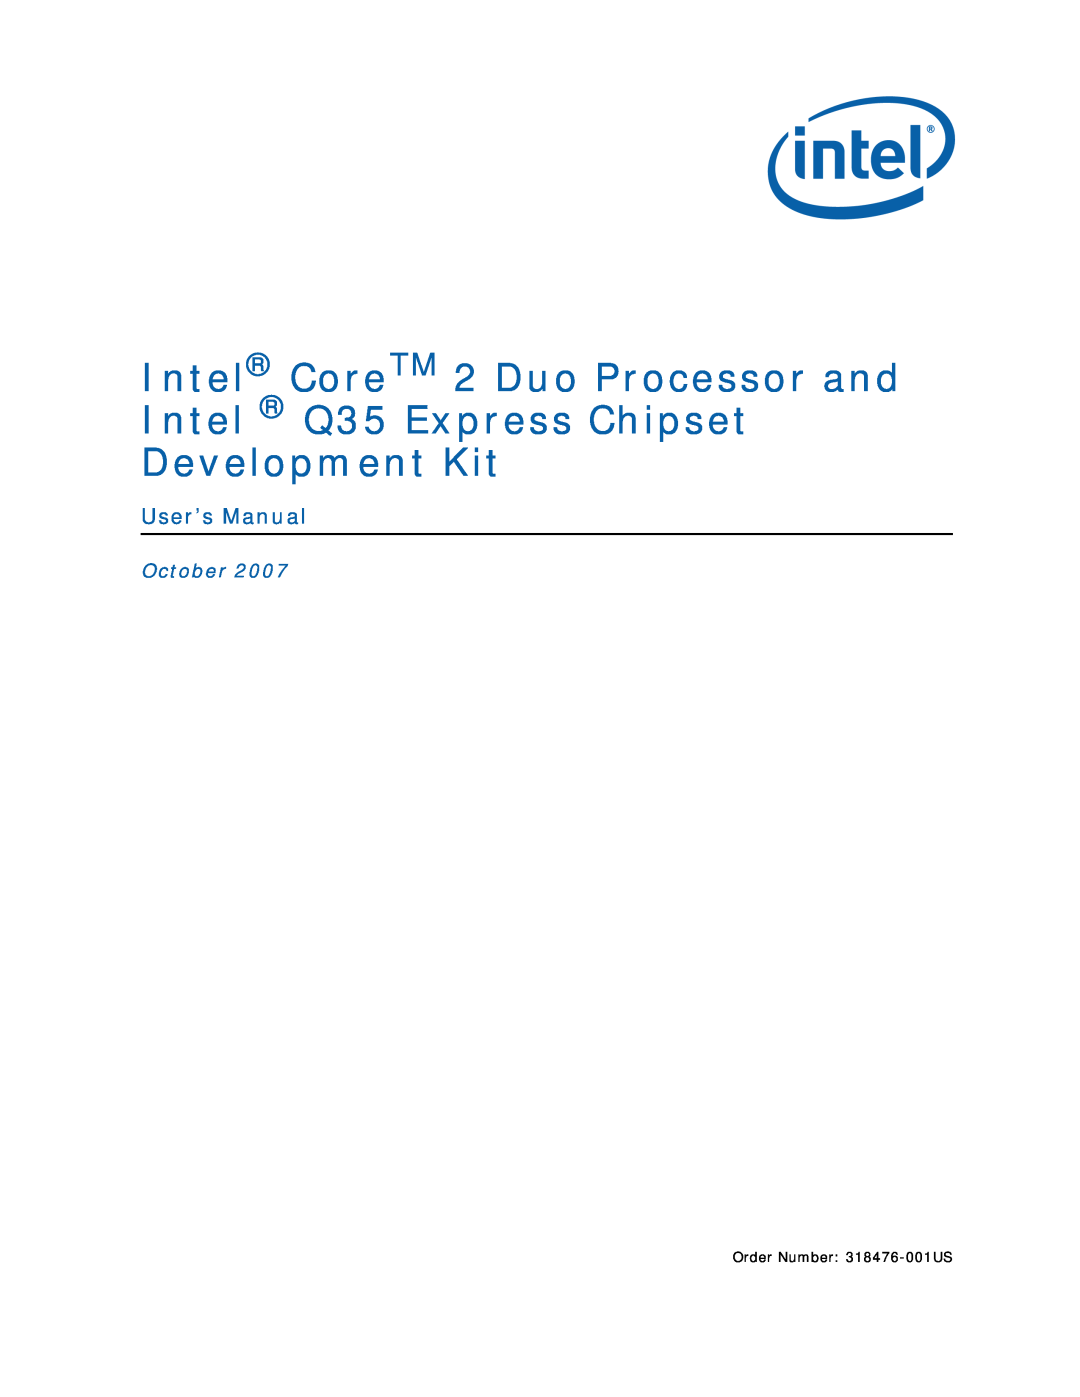 Intel user manual User’s Manual, Intel CoreTM 2 Duo Processor and Intel Q35 Express Chipset, Development Kit, October 